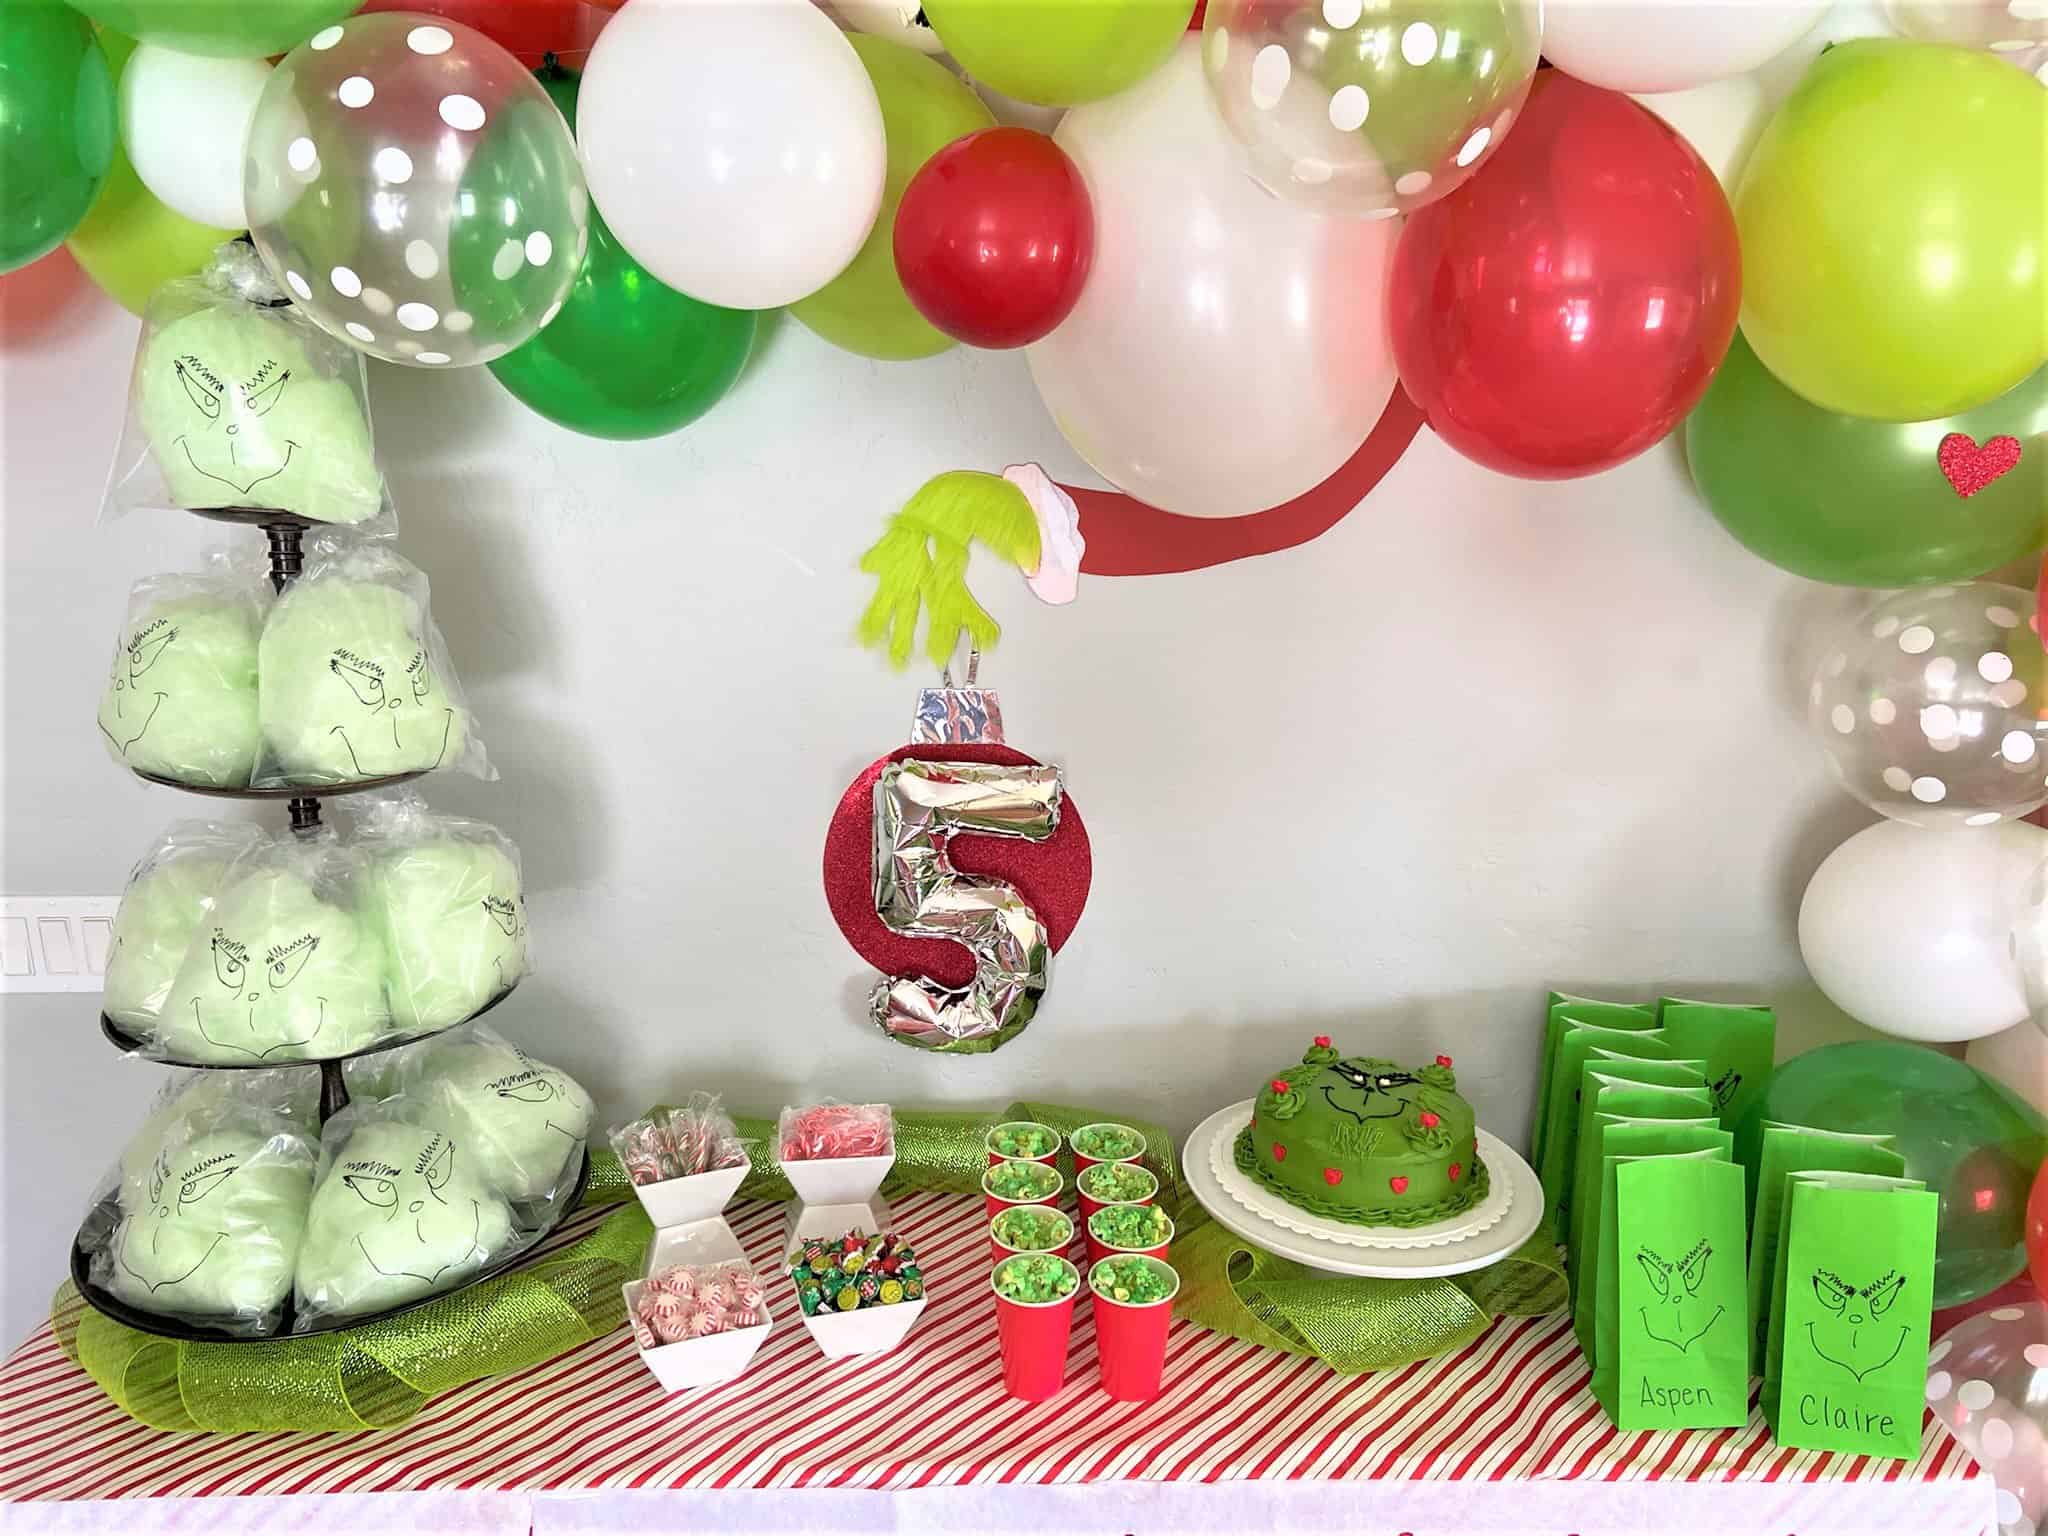 16 ~ Birthday Party Supplies Cake Dessert Marvel FANTASTIC FOUR SMALL NAPKINS